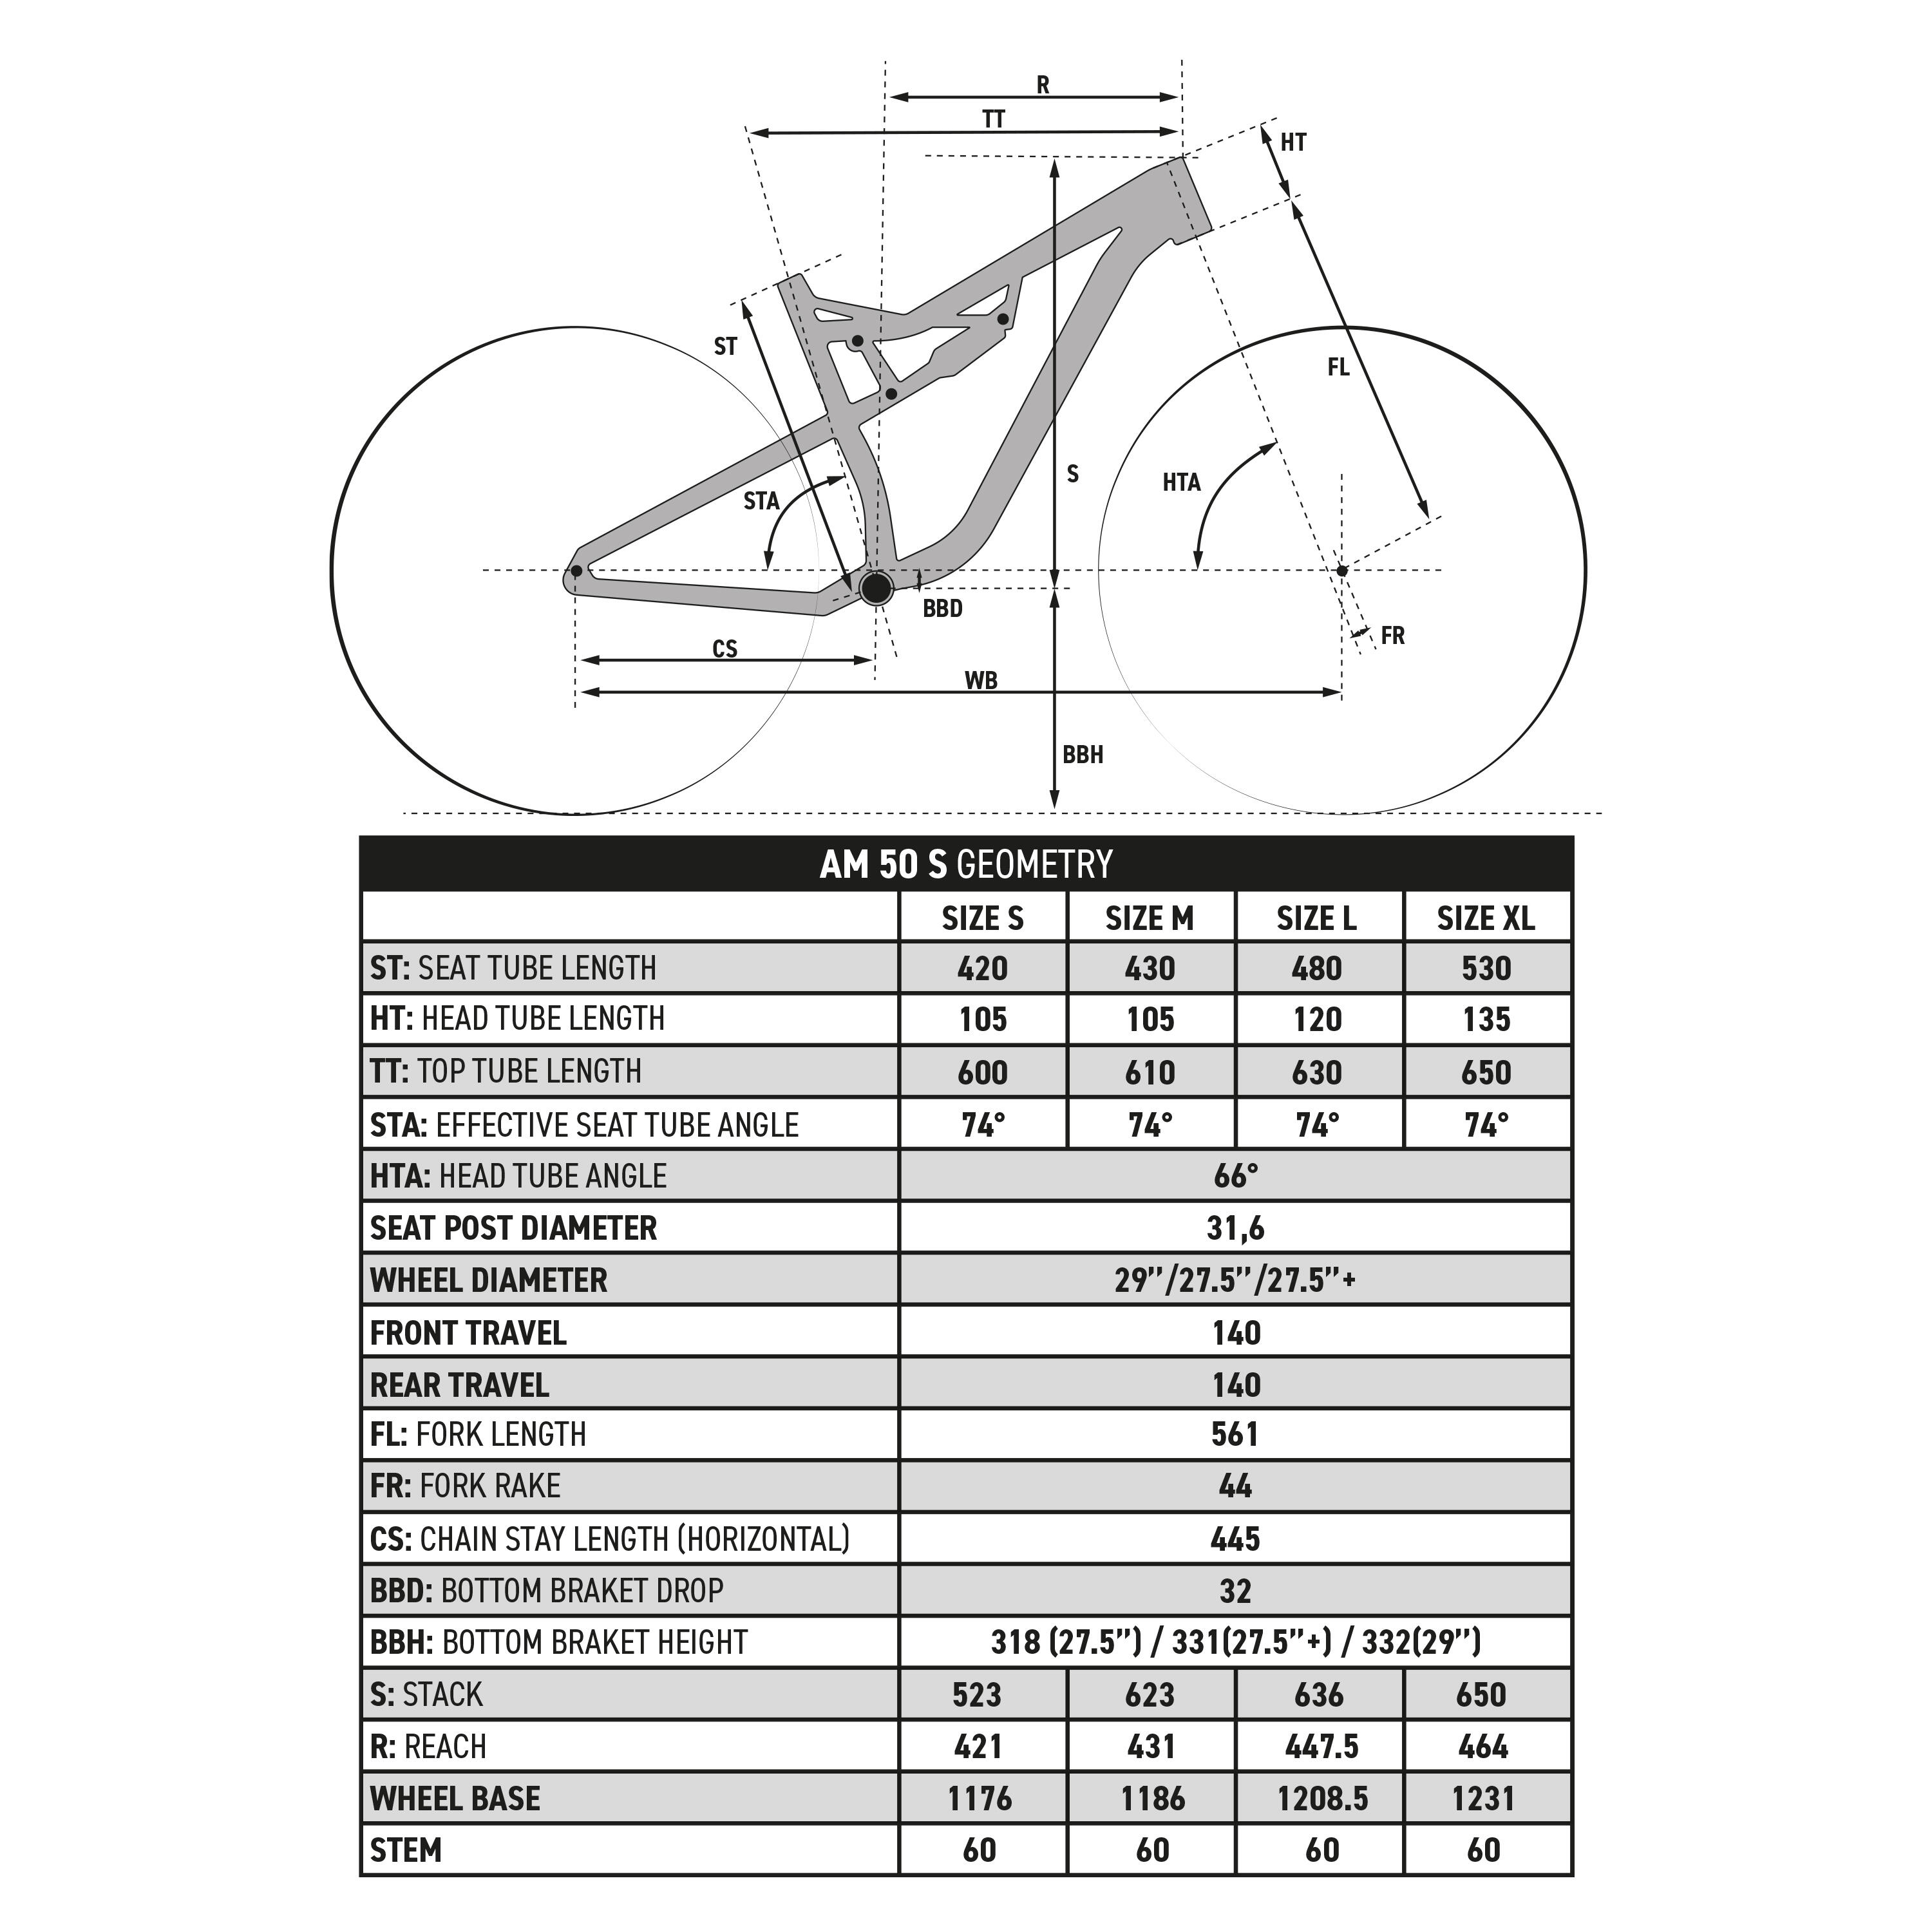 Hydraulic Disc Brakes All-Mountain Bike - AM 50 S - ROCKRIDER